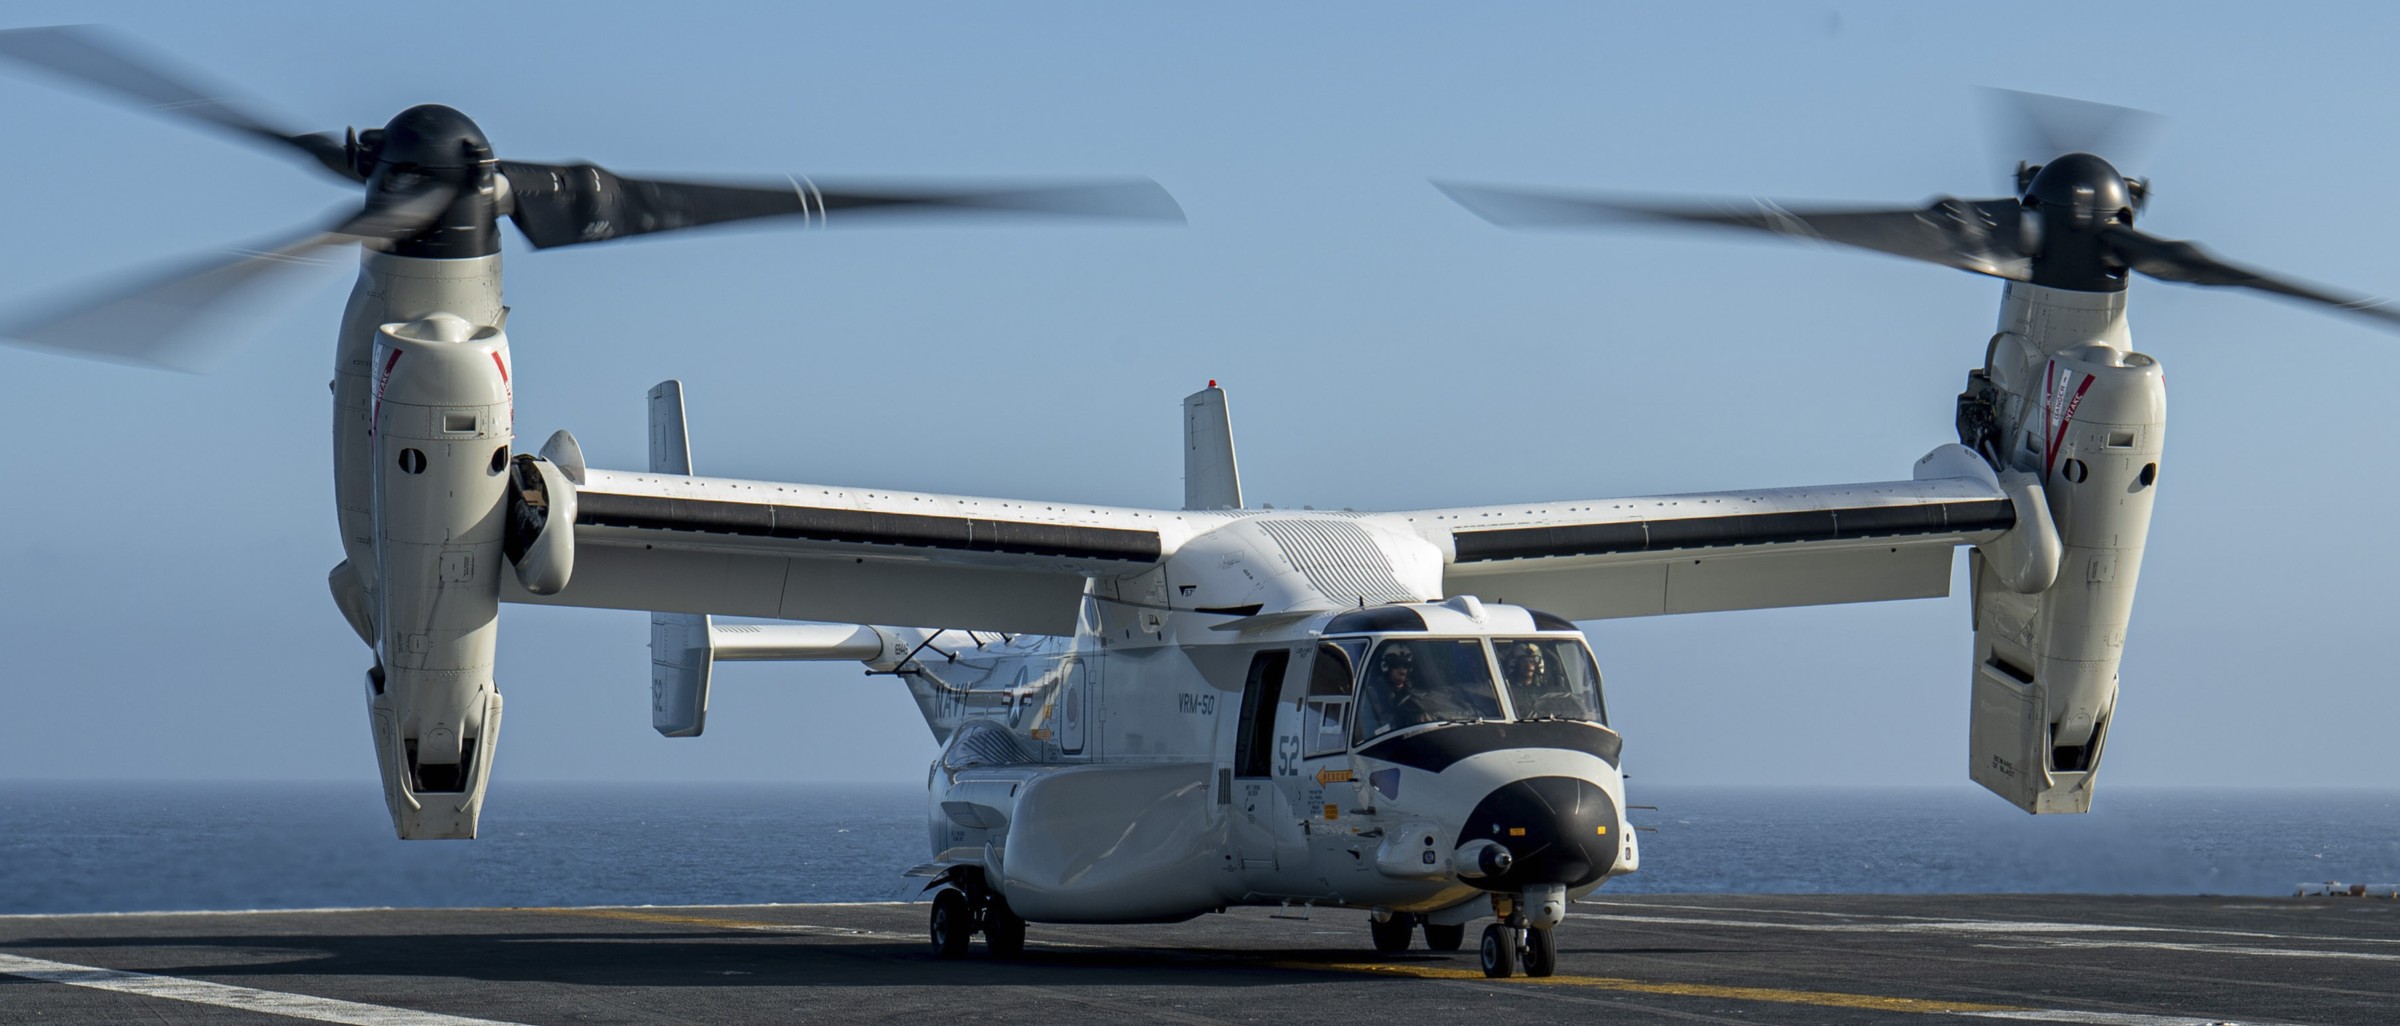 vrm-50 sun hawks fleet logistics multi mission squadron us navy cmv-22b osprey replacement frs uss nimitz cvn-68 24